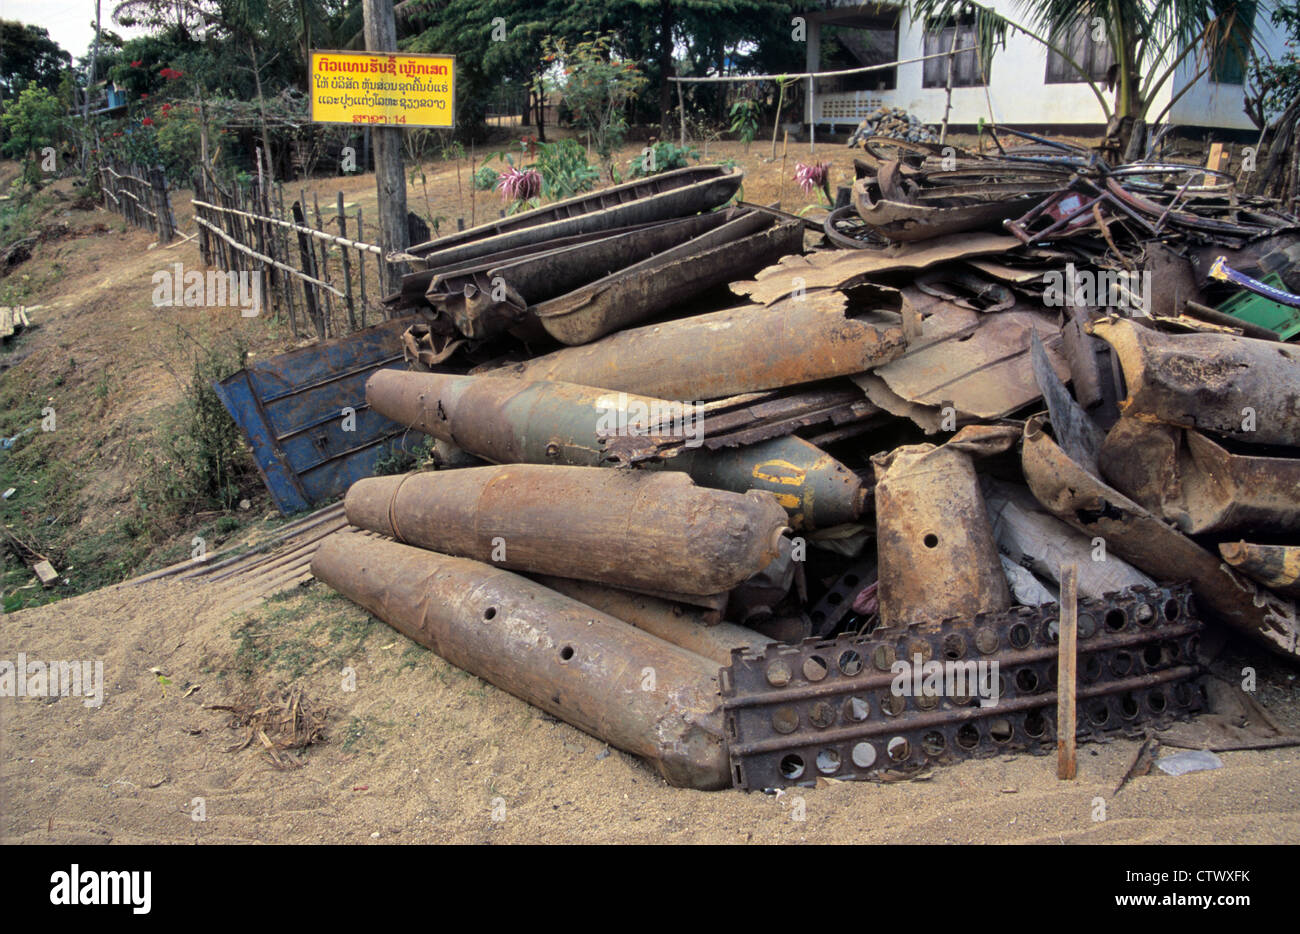 Scrap Metal of US Phonsavan Cluster Bomb Cases from Vietnam War Piled Up in Scrap Yard in Phonsavan Laos Stock Photo